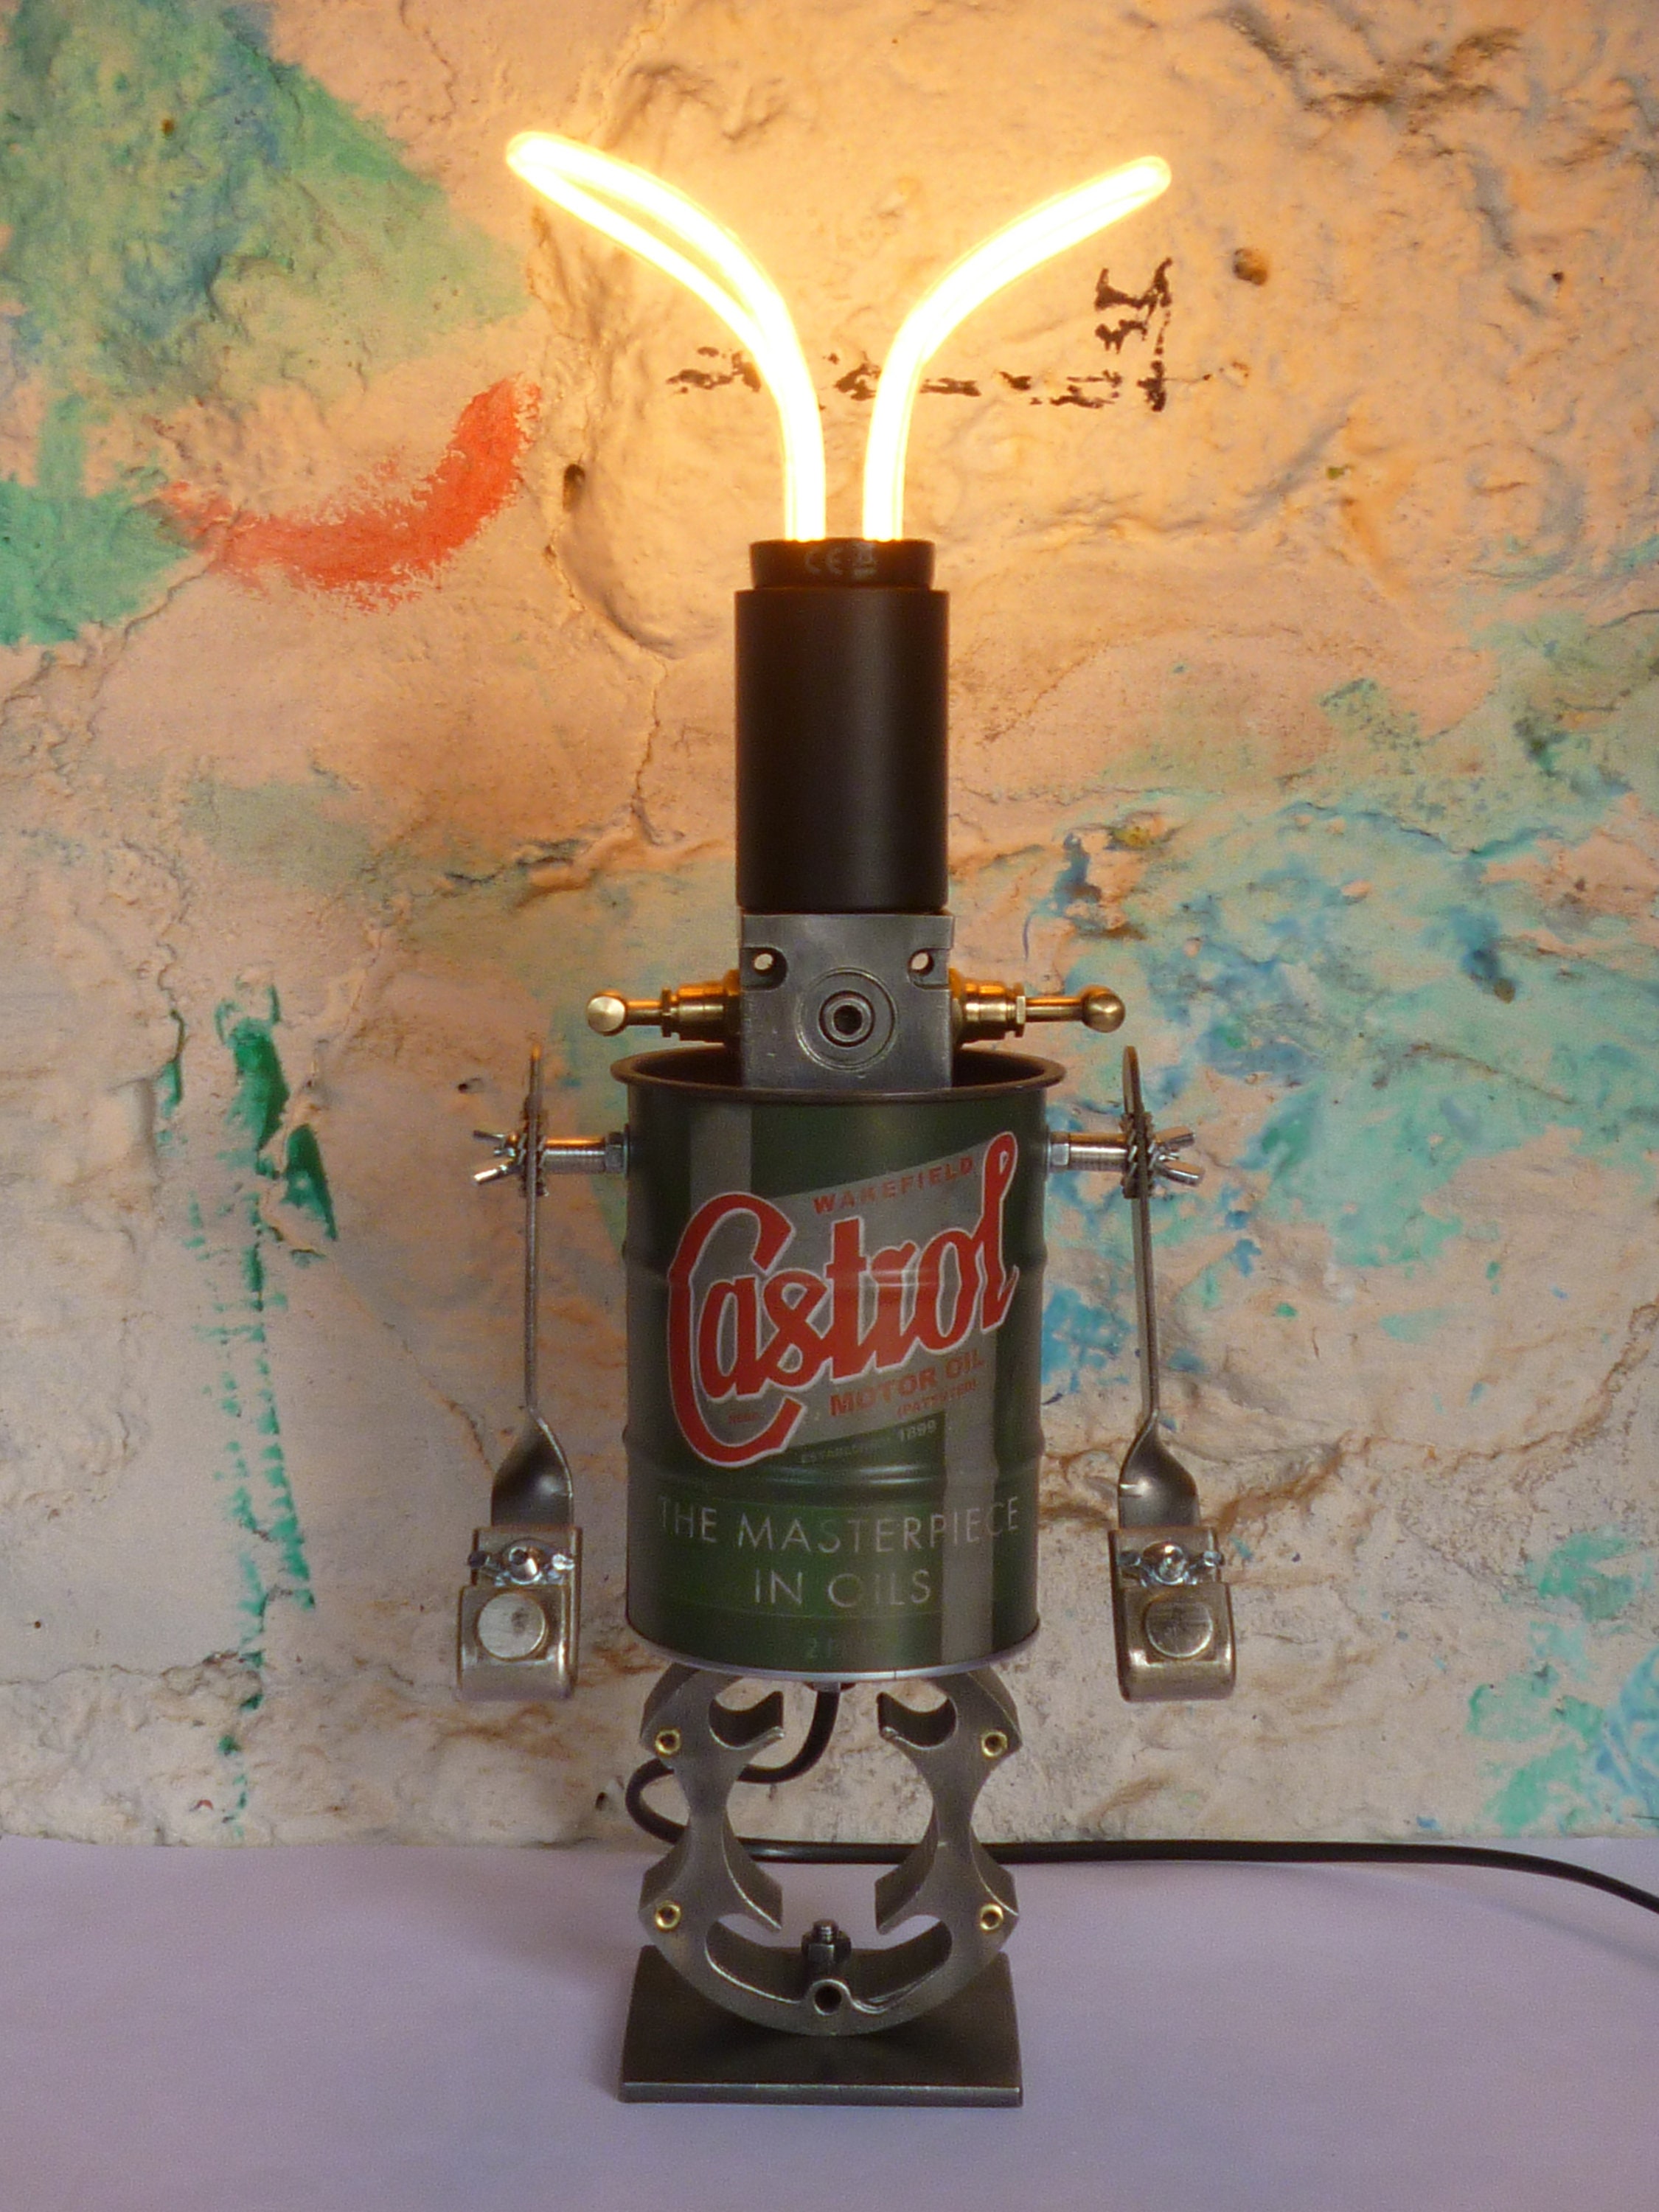 Lampe - Robot Castrol -